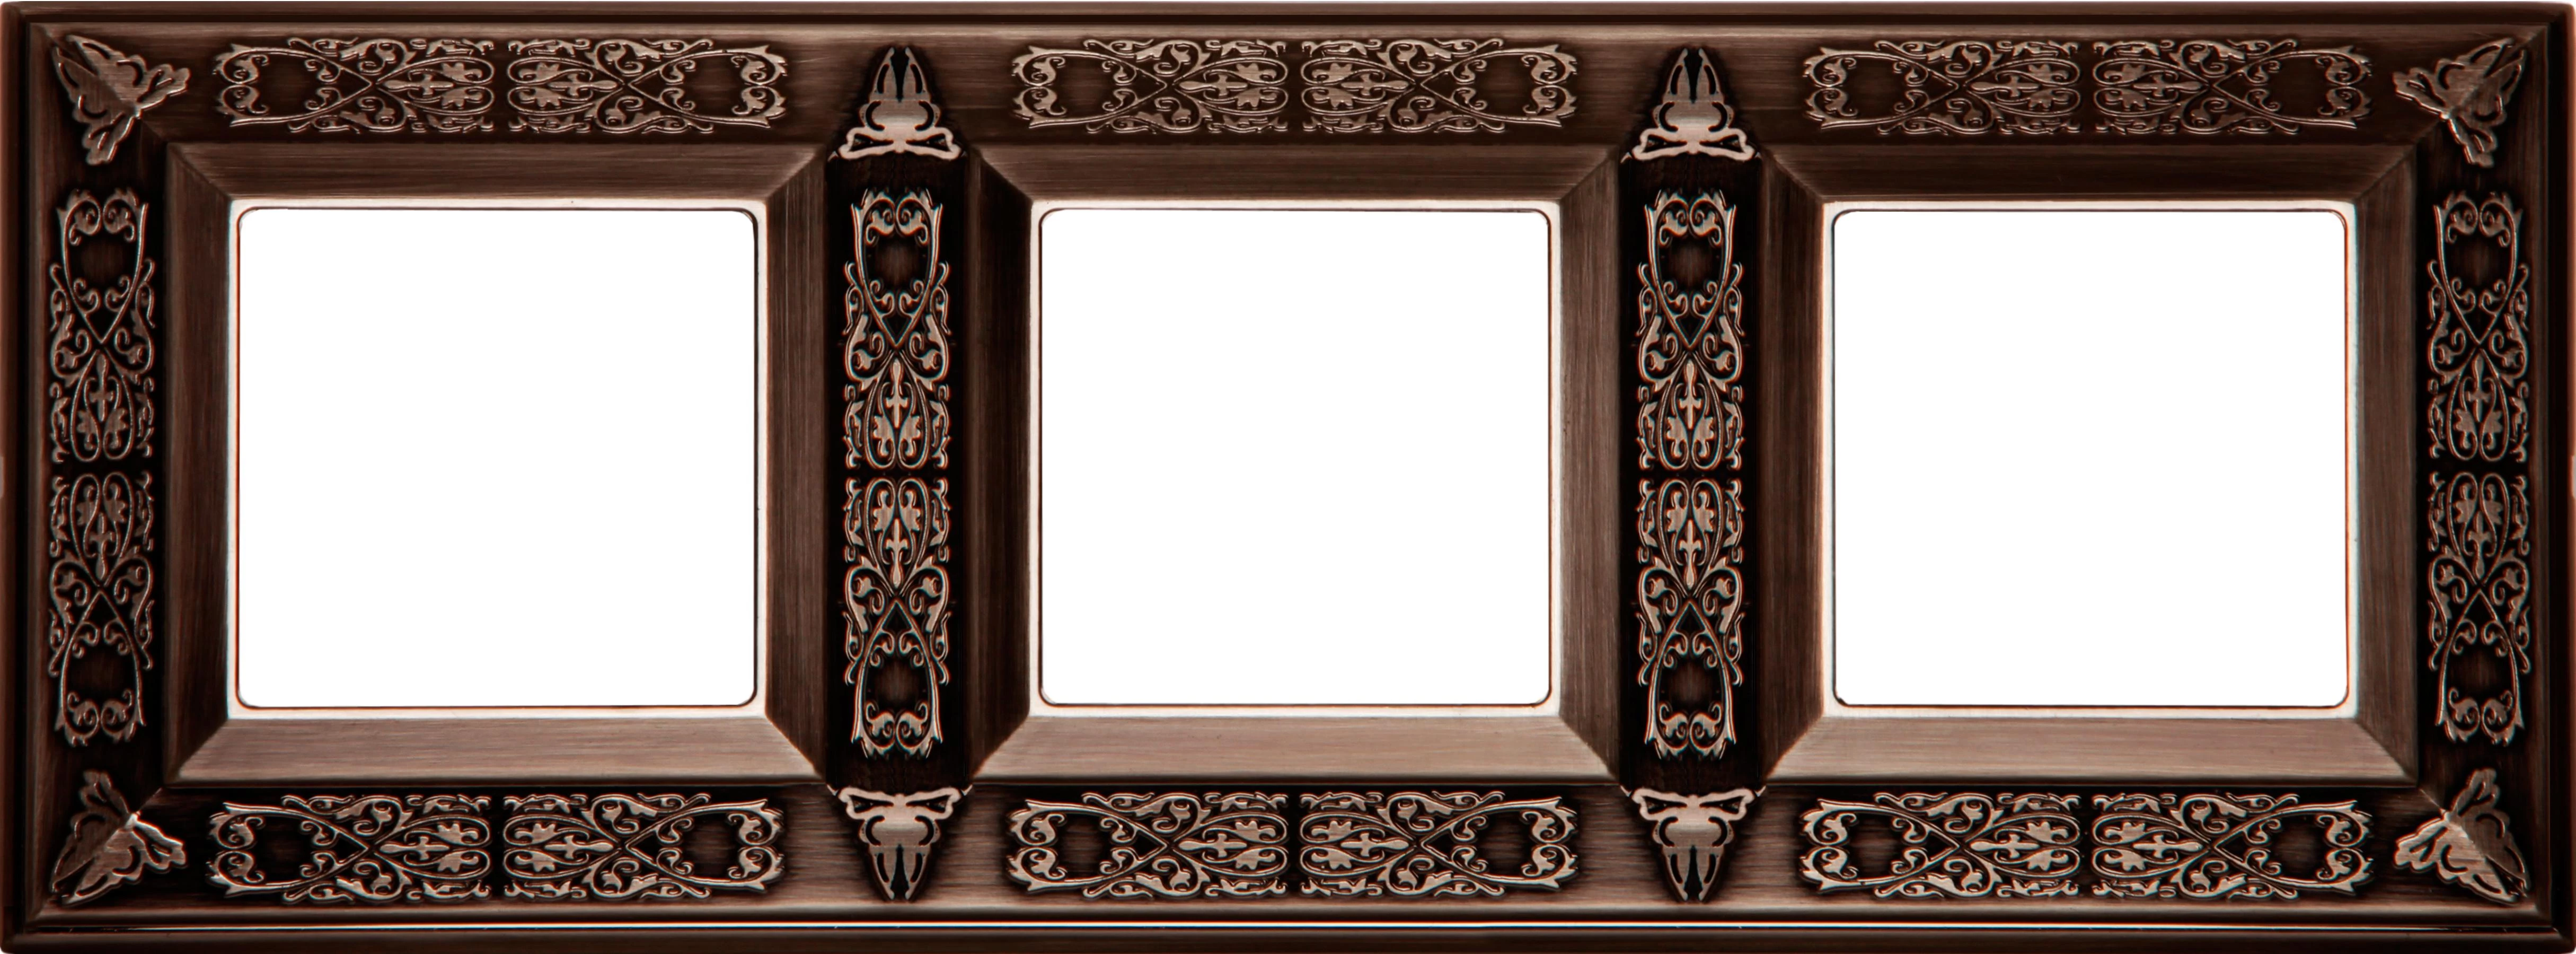  артикул FD01413CO название Рамка 3-ая (тройная), цвет Состаренная медь, Granada, Fede